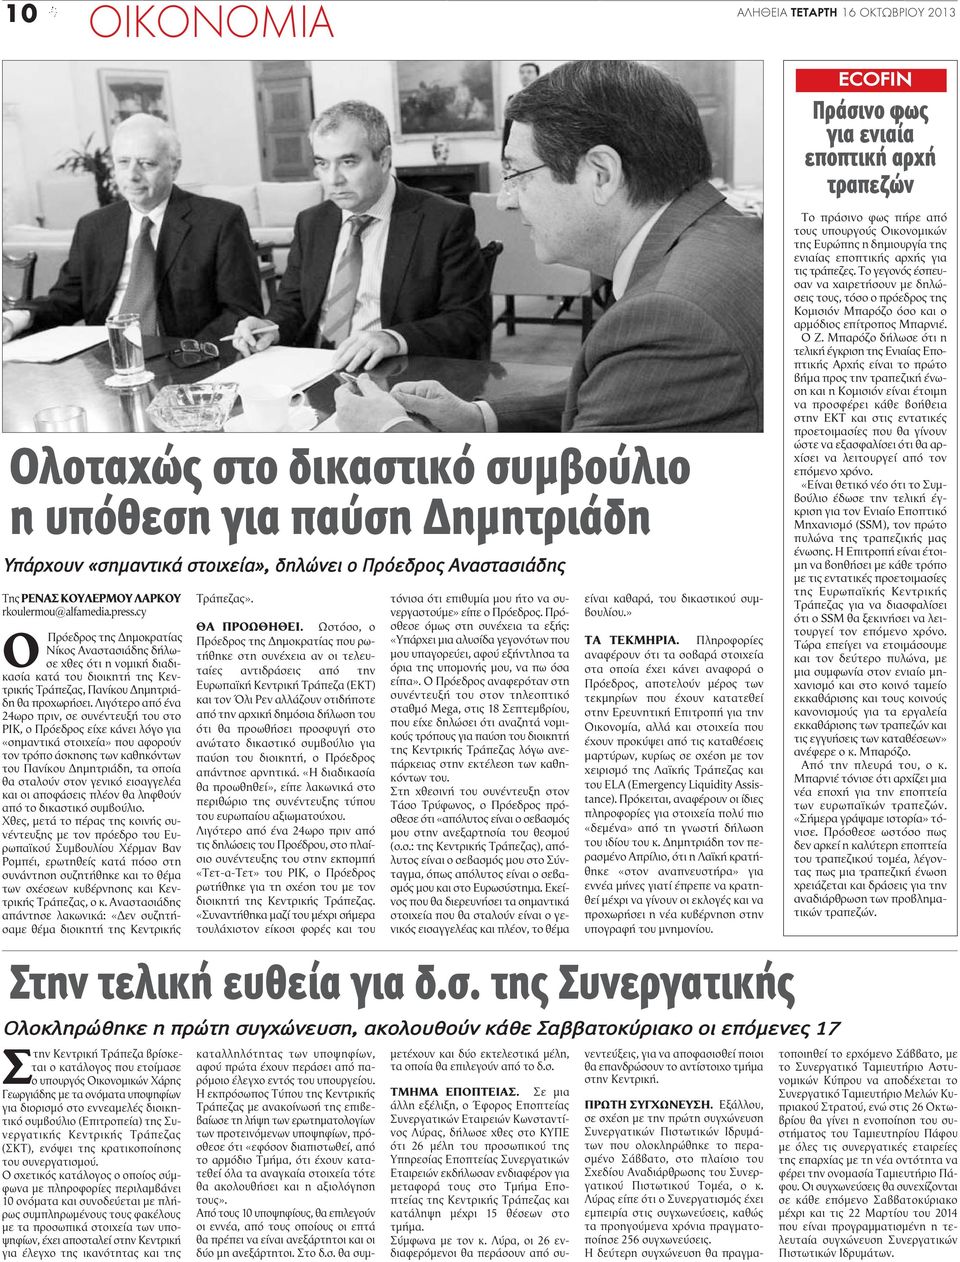 cy Ο Πρόεδρος της Δημοκρατίας Νίκος Αναστασιάδης δήλωσε χθες ότι η νομική διαδικασία κατά του διοικητή της Κεντρικής Τράπεζας, Πανίκου Δημητριάδη θα προχωρήσει.